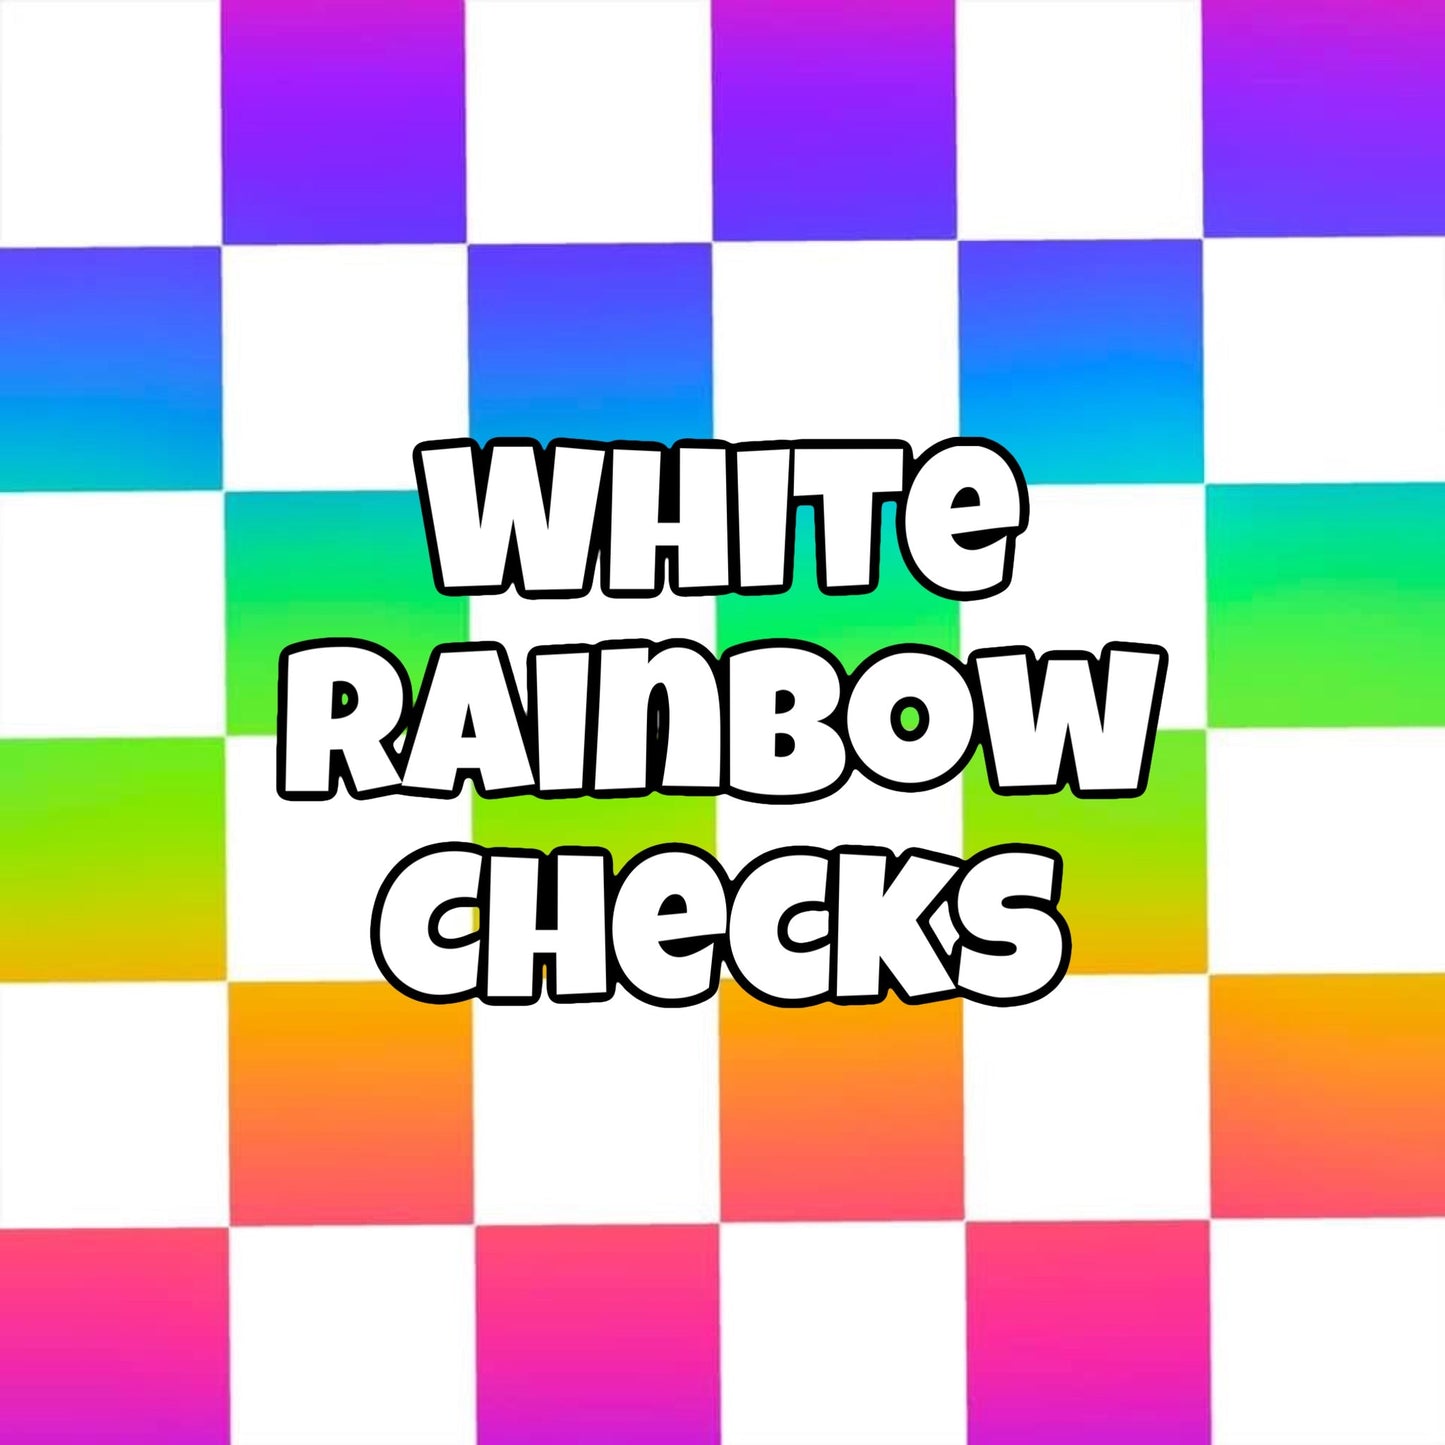 WHITE RAINBOW CHECKS